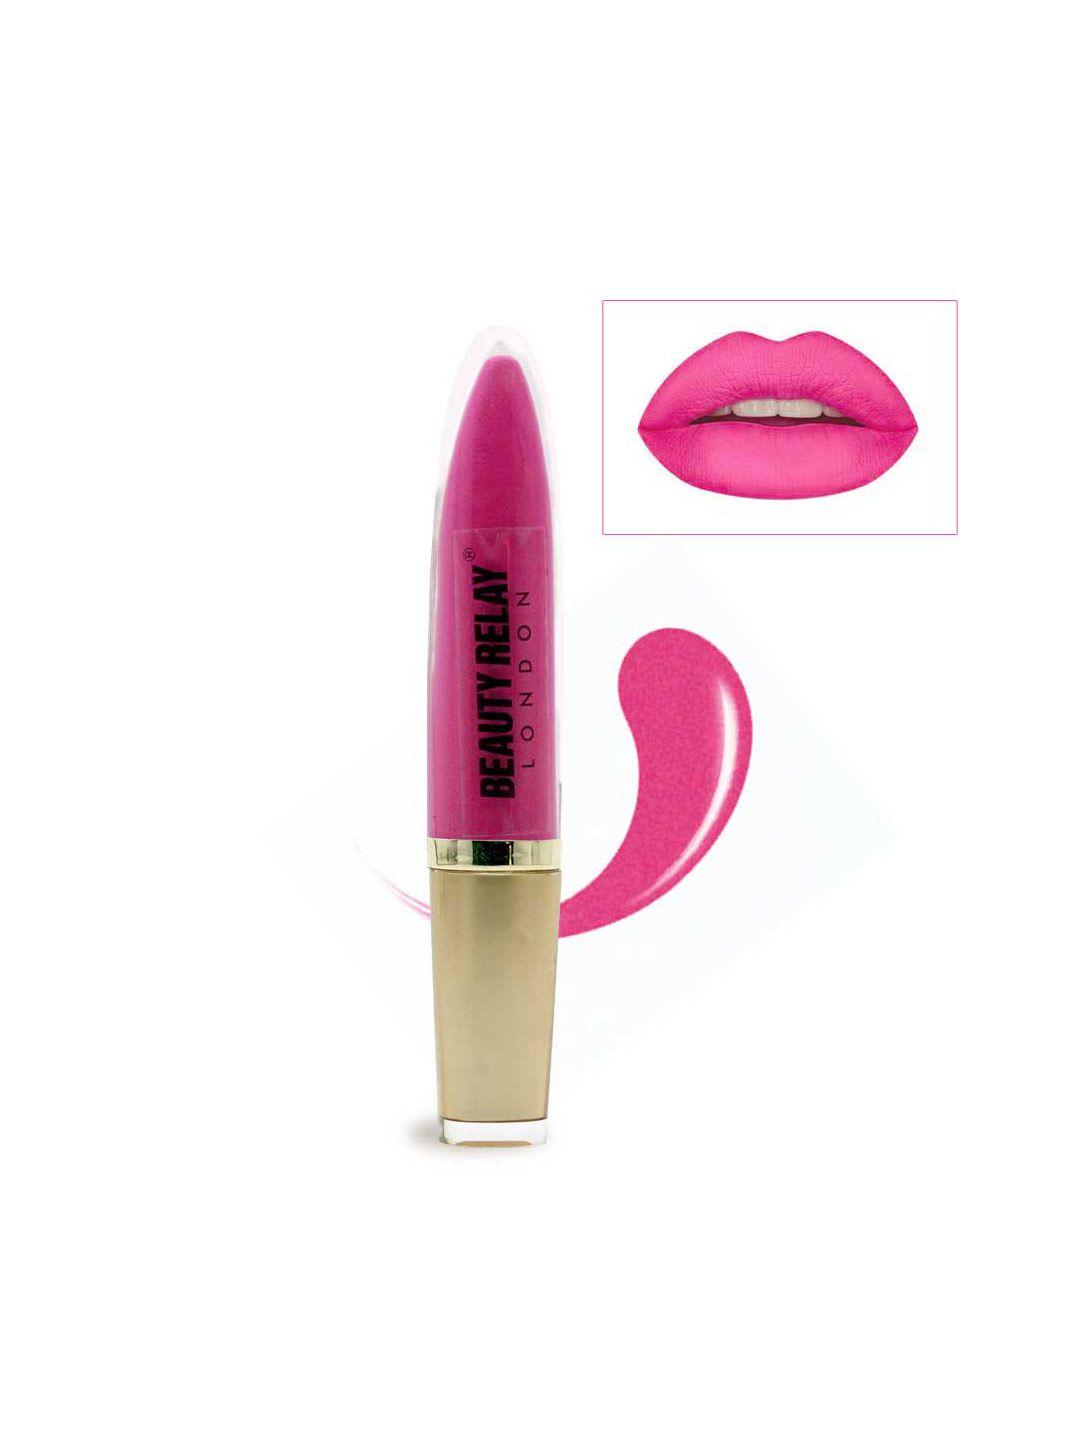 beautyrelay london marker lip & cheek gleam lip gloss 5g - pink up